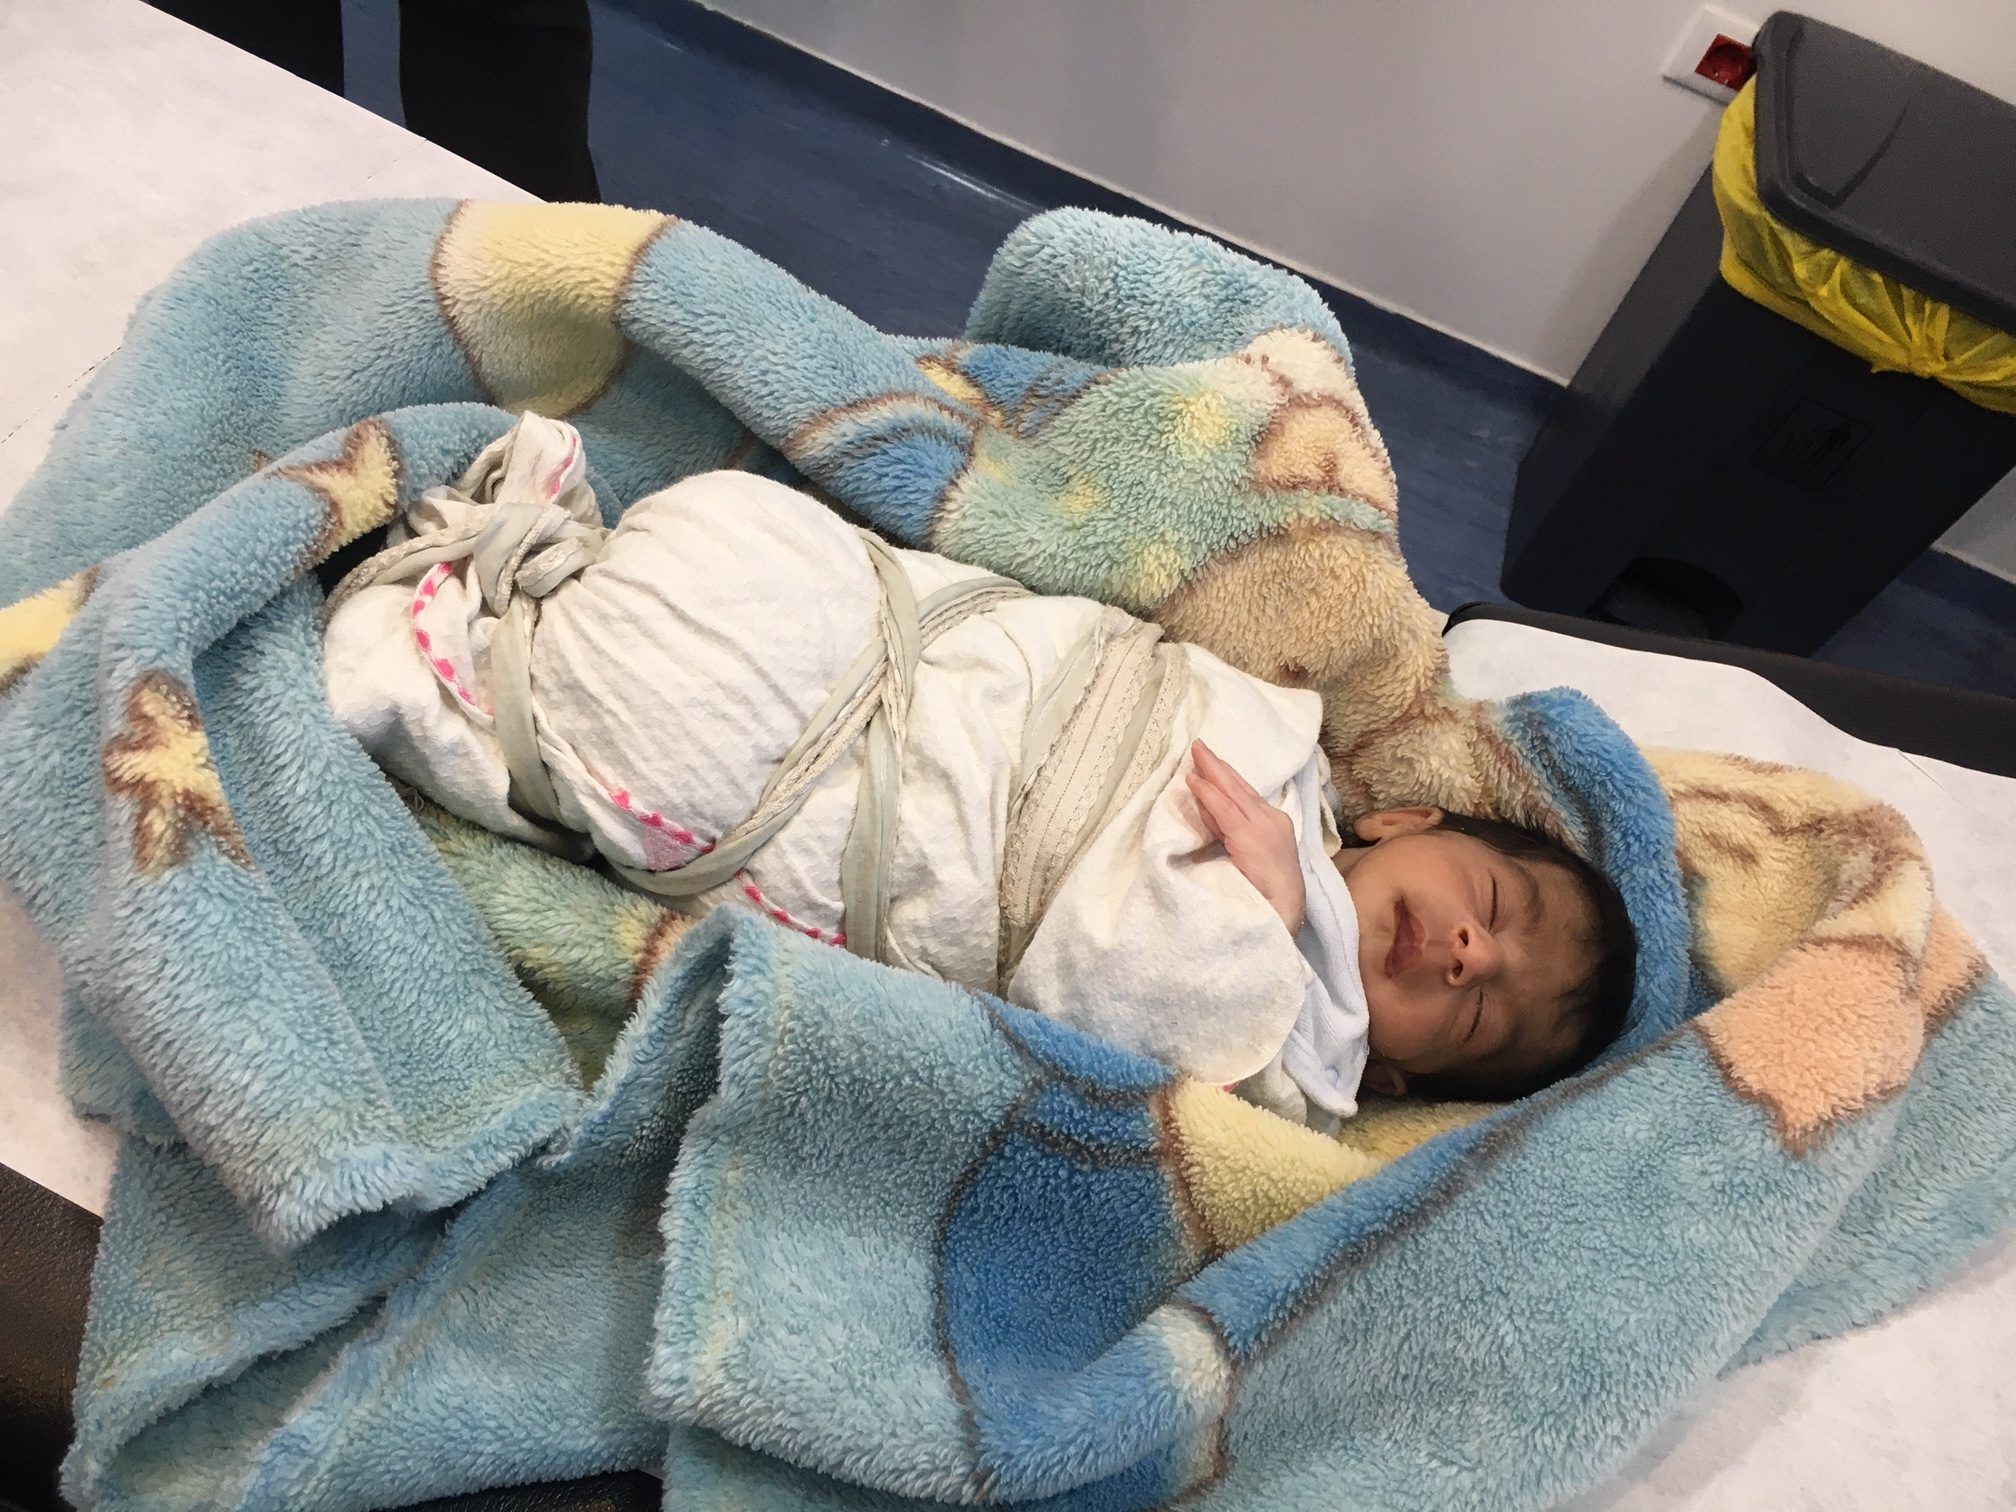 Baby Cedra hat Dank Spenden die lebensnotwendige Operation erhalten